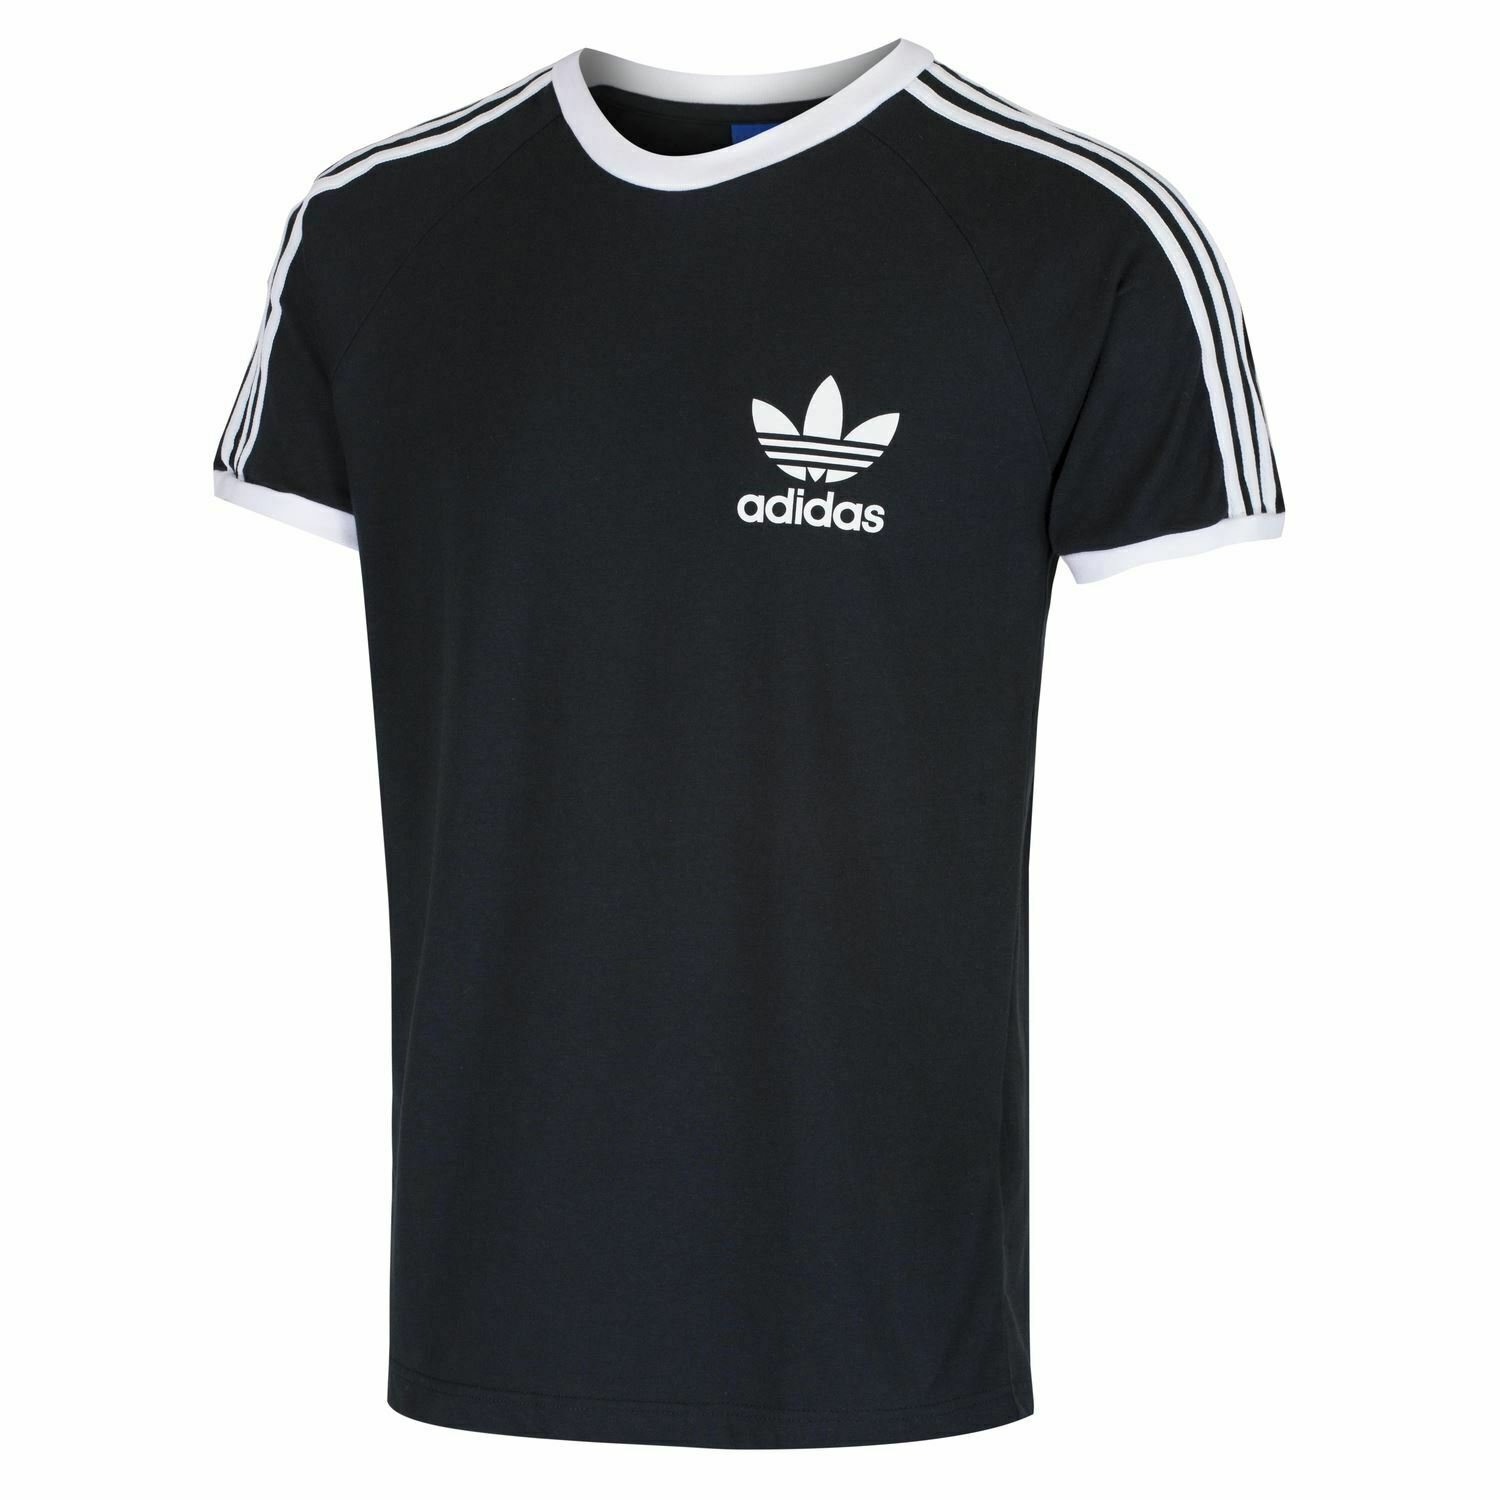 Adidas Originals California Men's T-Shirt Trefoil Retro 3-Stripes Short Sleeve